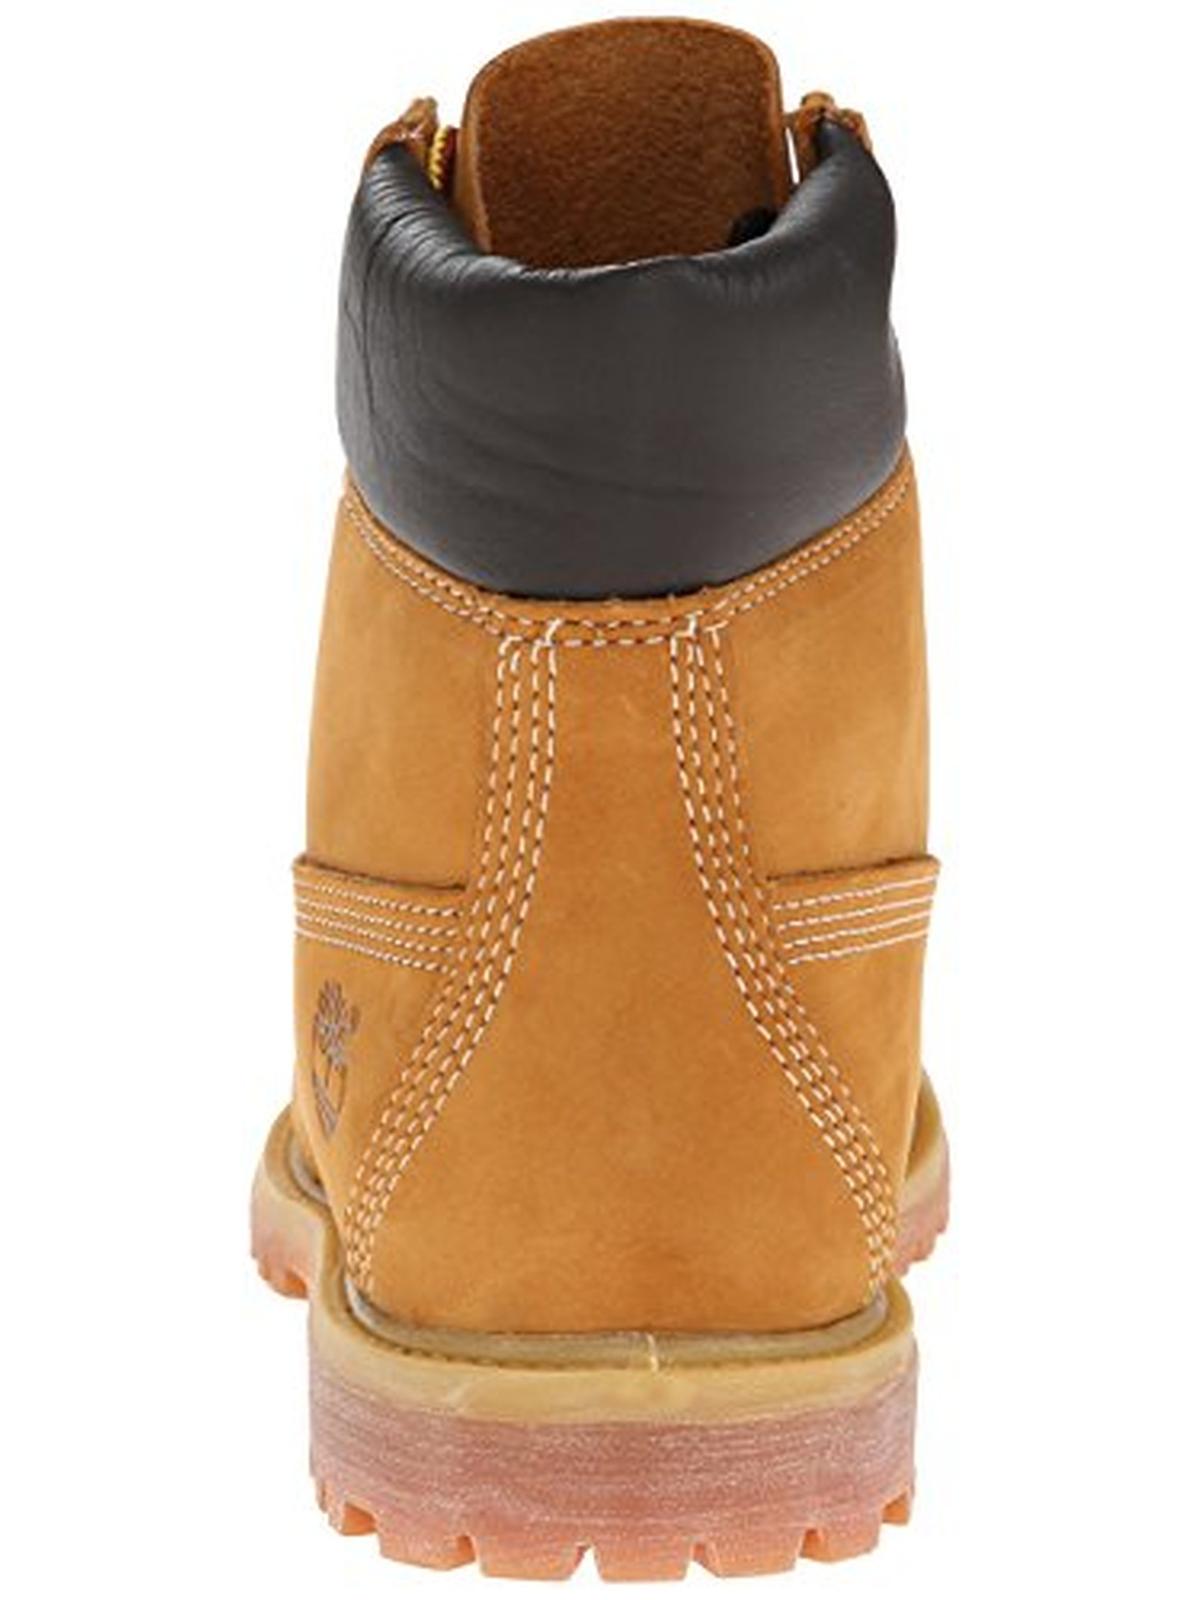 Timberland Women's Icon 6 Inch Premium Boot - image 2 of 4